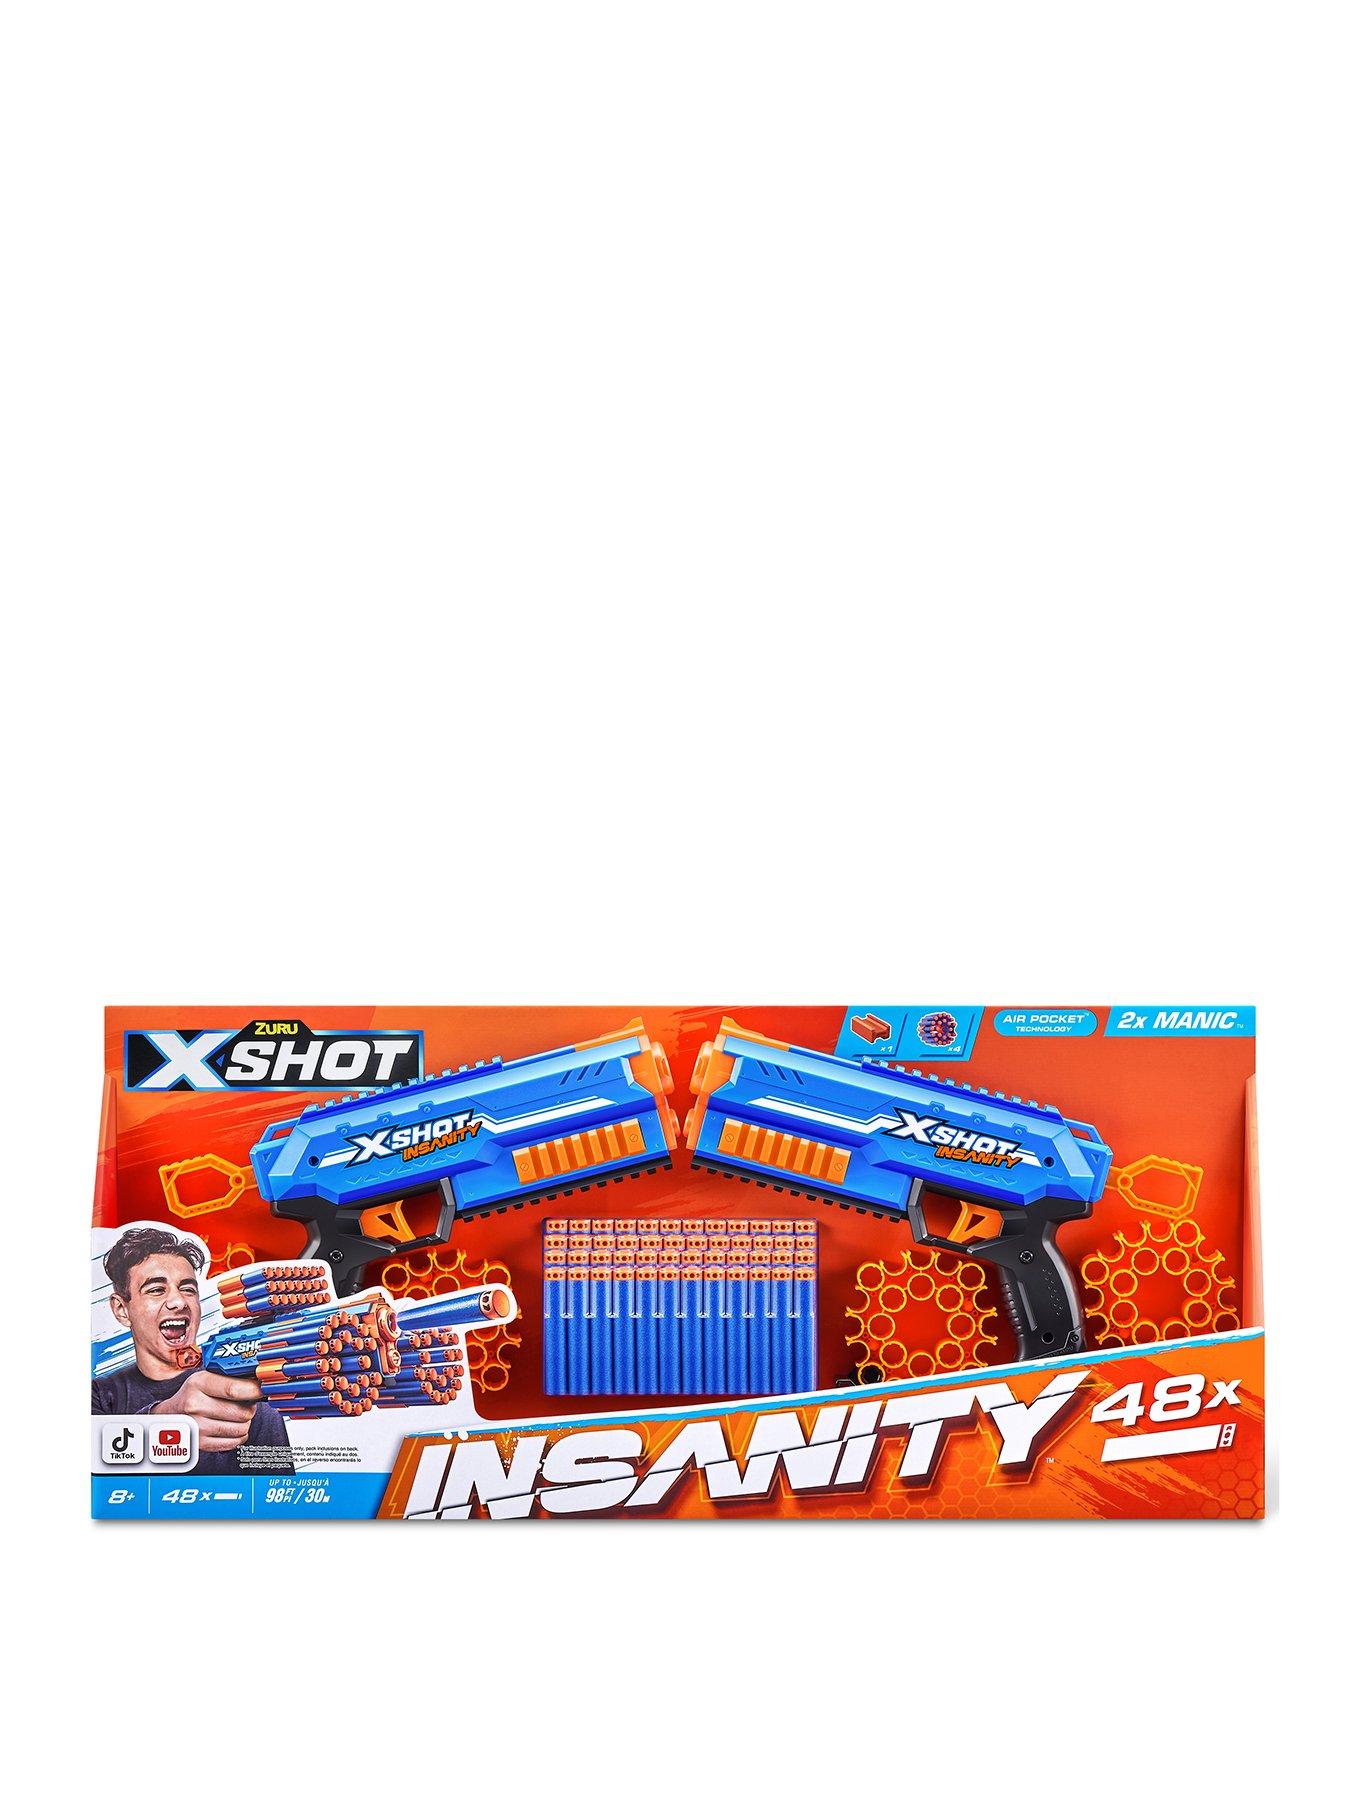 XShot Insanity Mad Mega Barrel - Insanity at its most intense